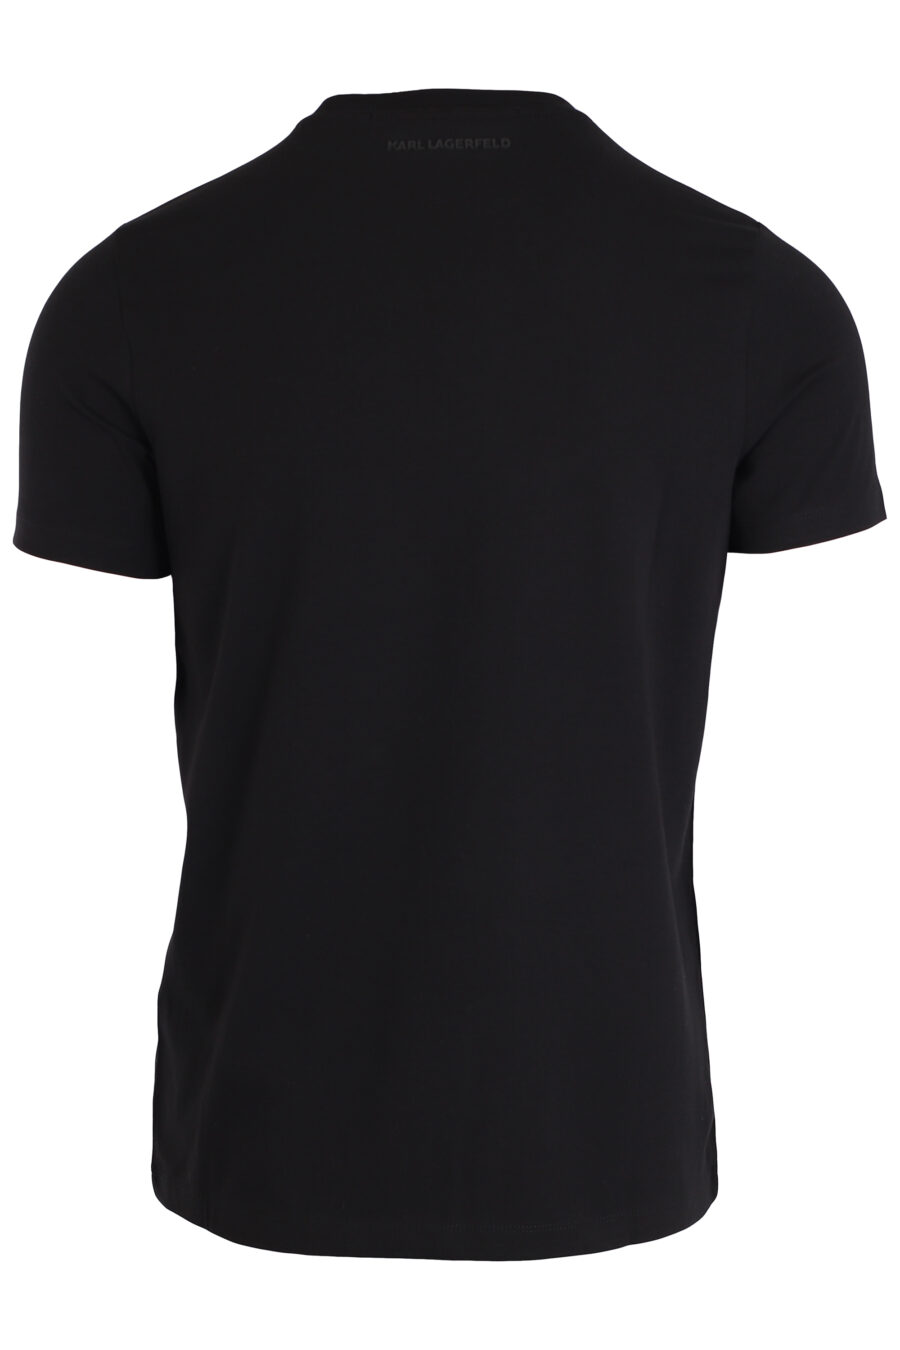 T-shirt black with logo "ikonik" - IMG 3977